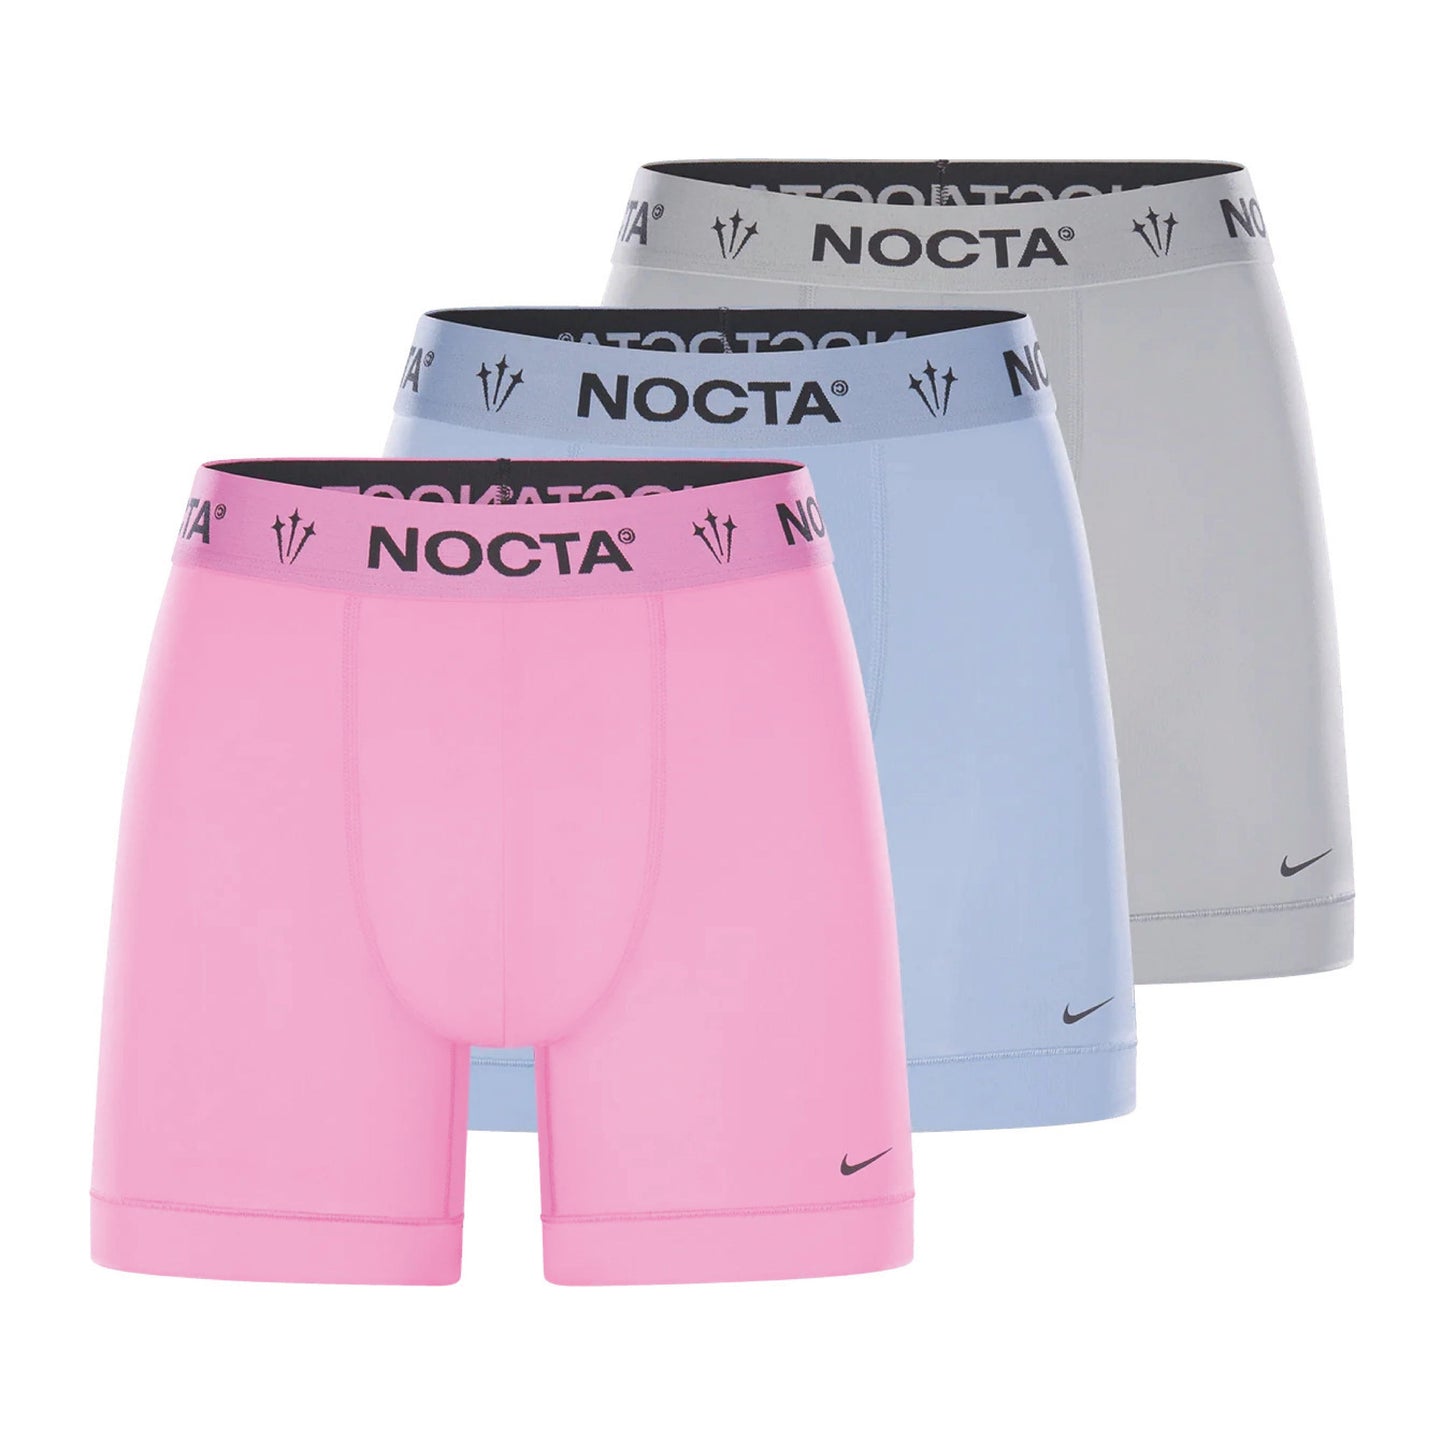 Nike x NOCTA NRG Boxers - 3 Pack